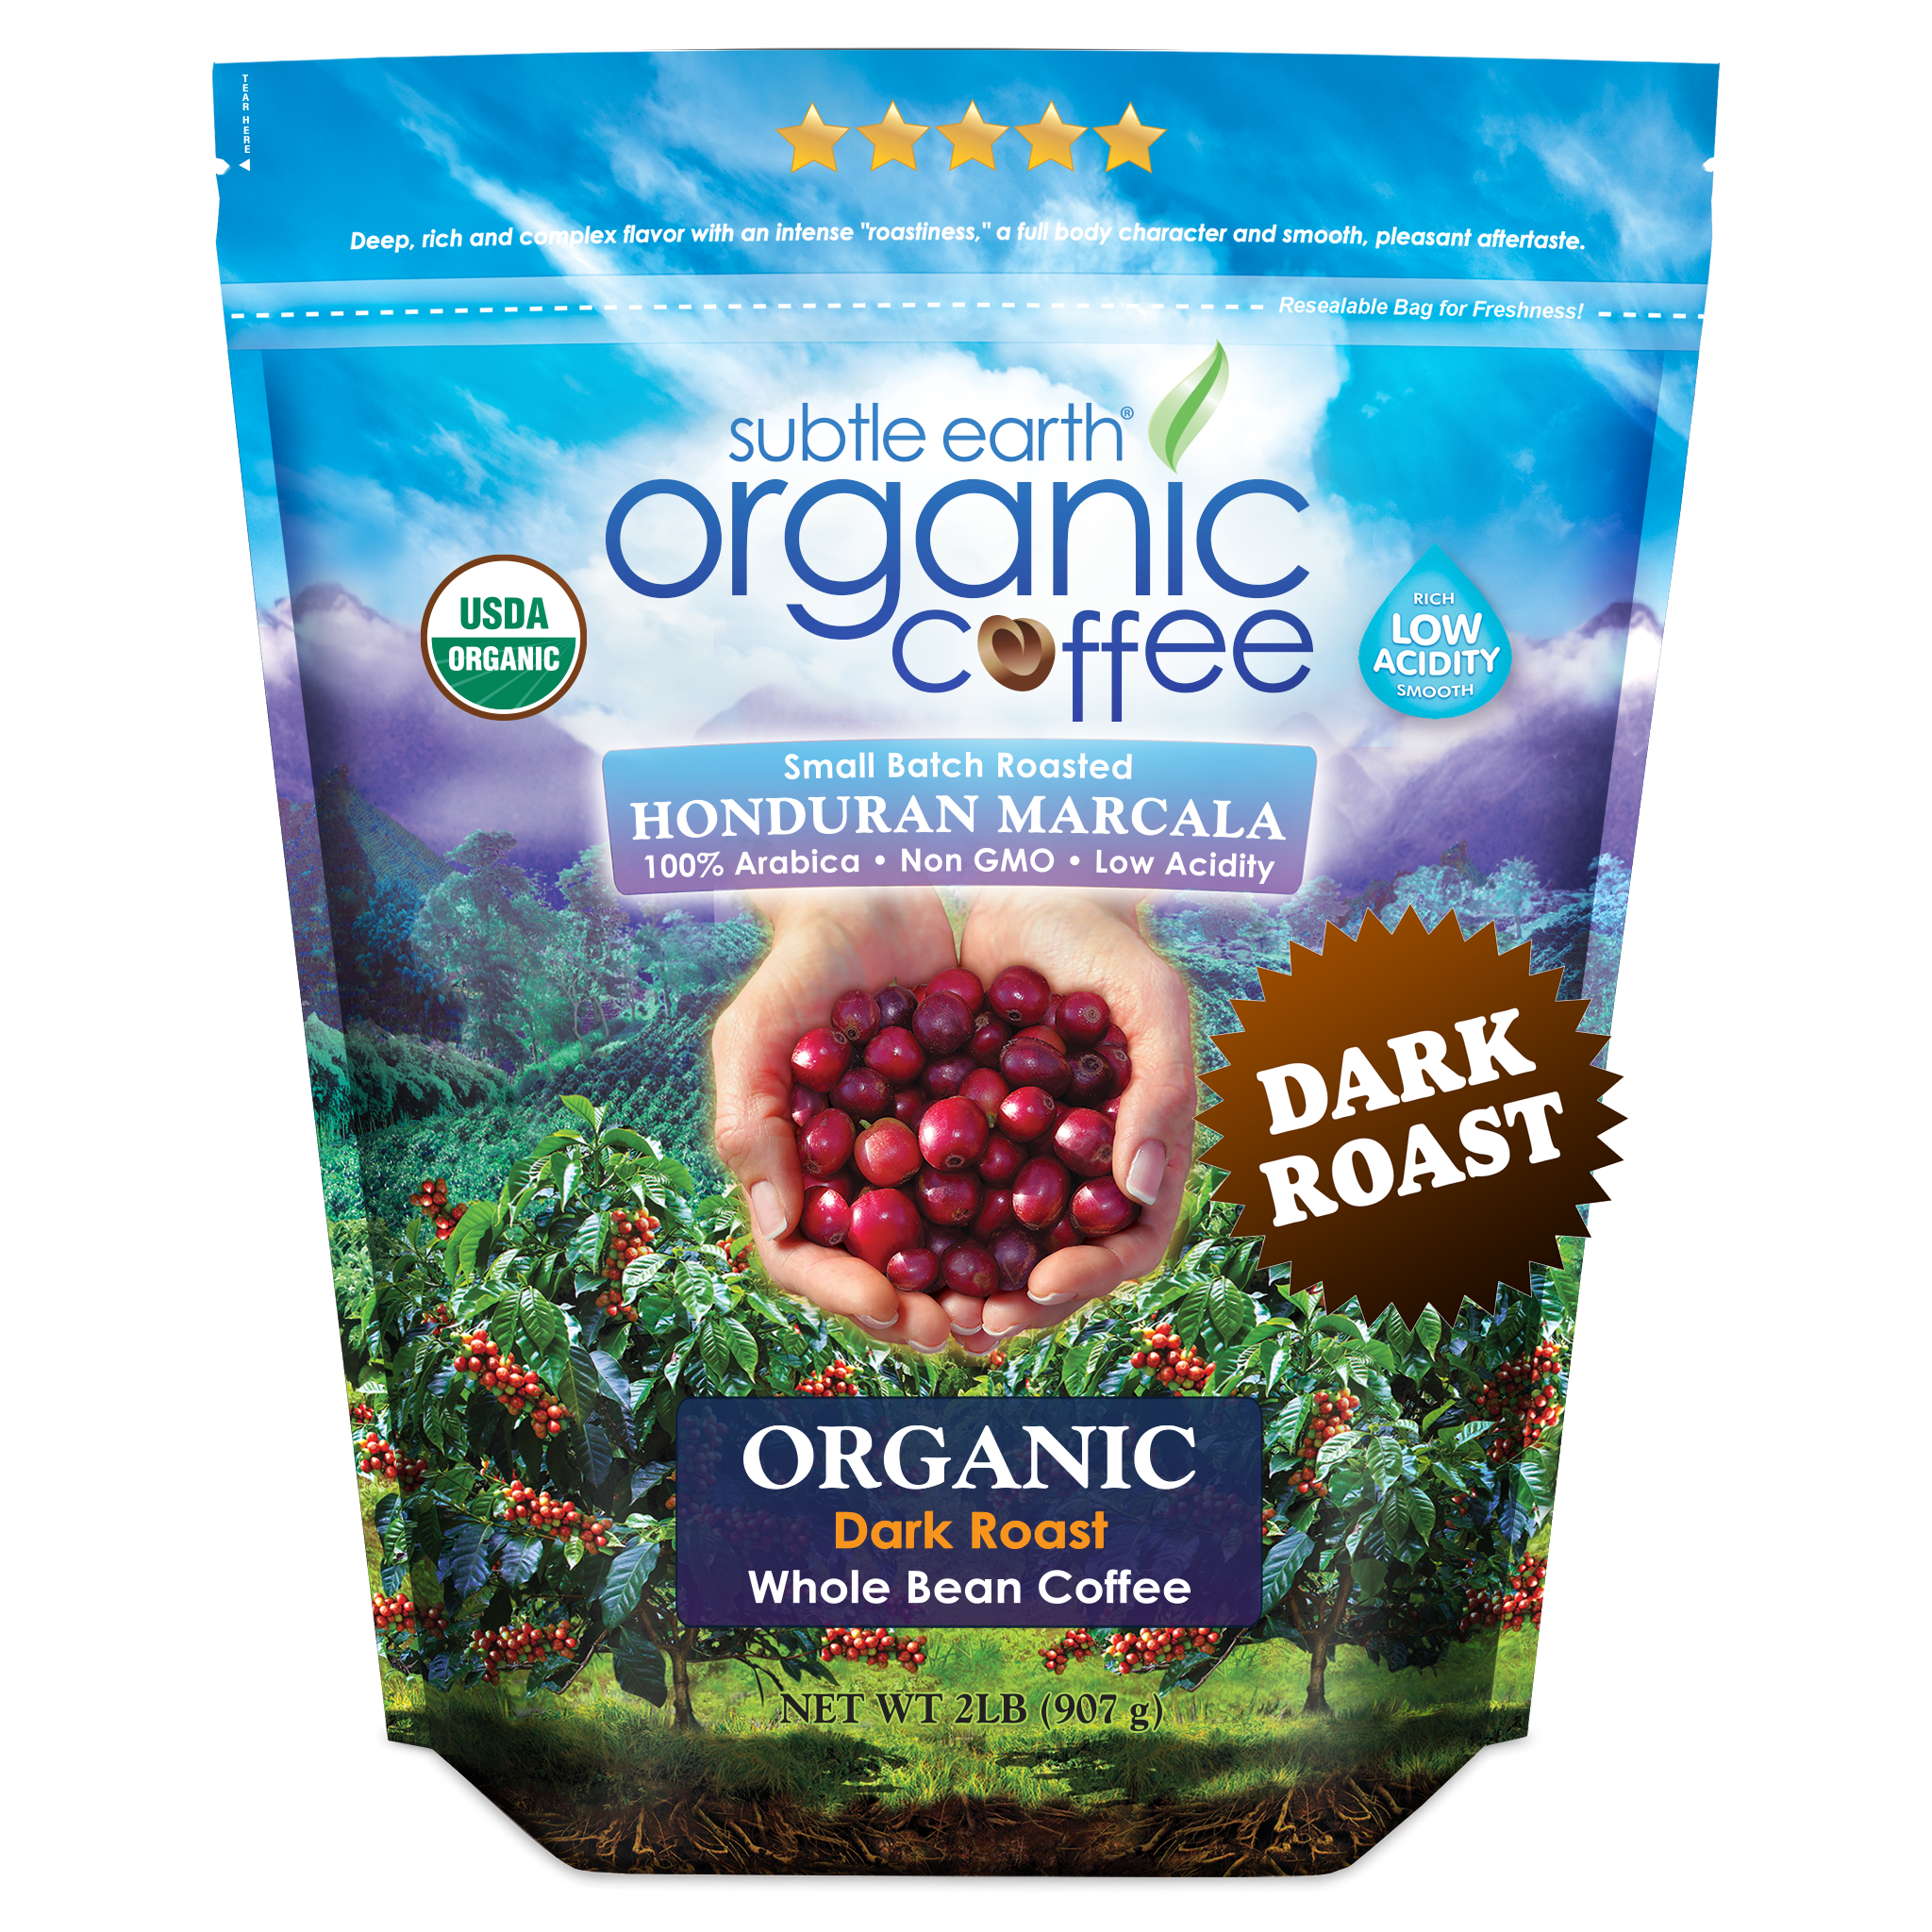 Subtle Earth Organic Medium-Dark Roast Coffee 2LB Bag hide